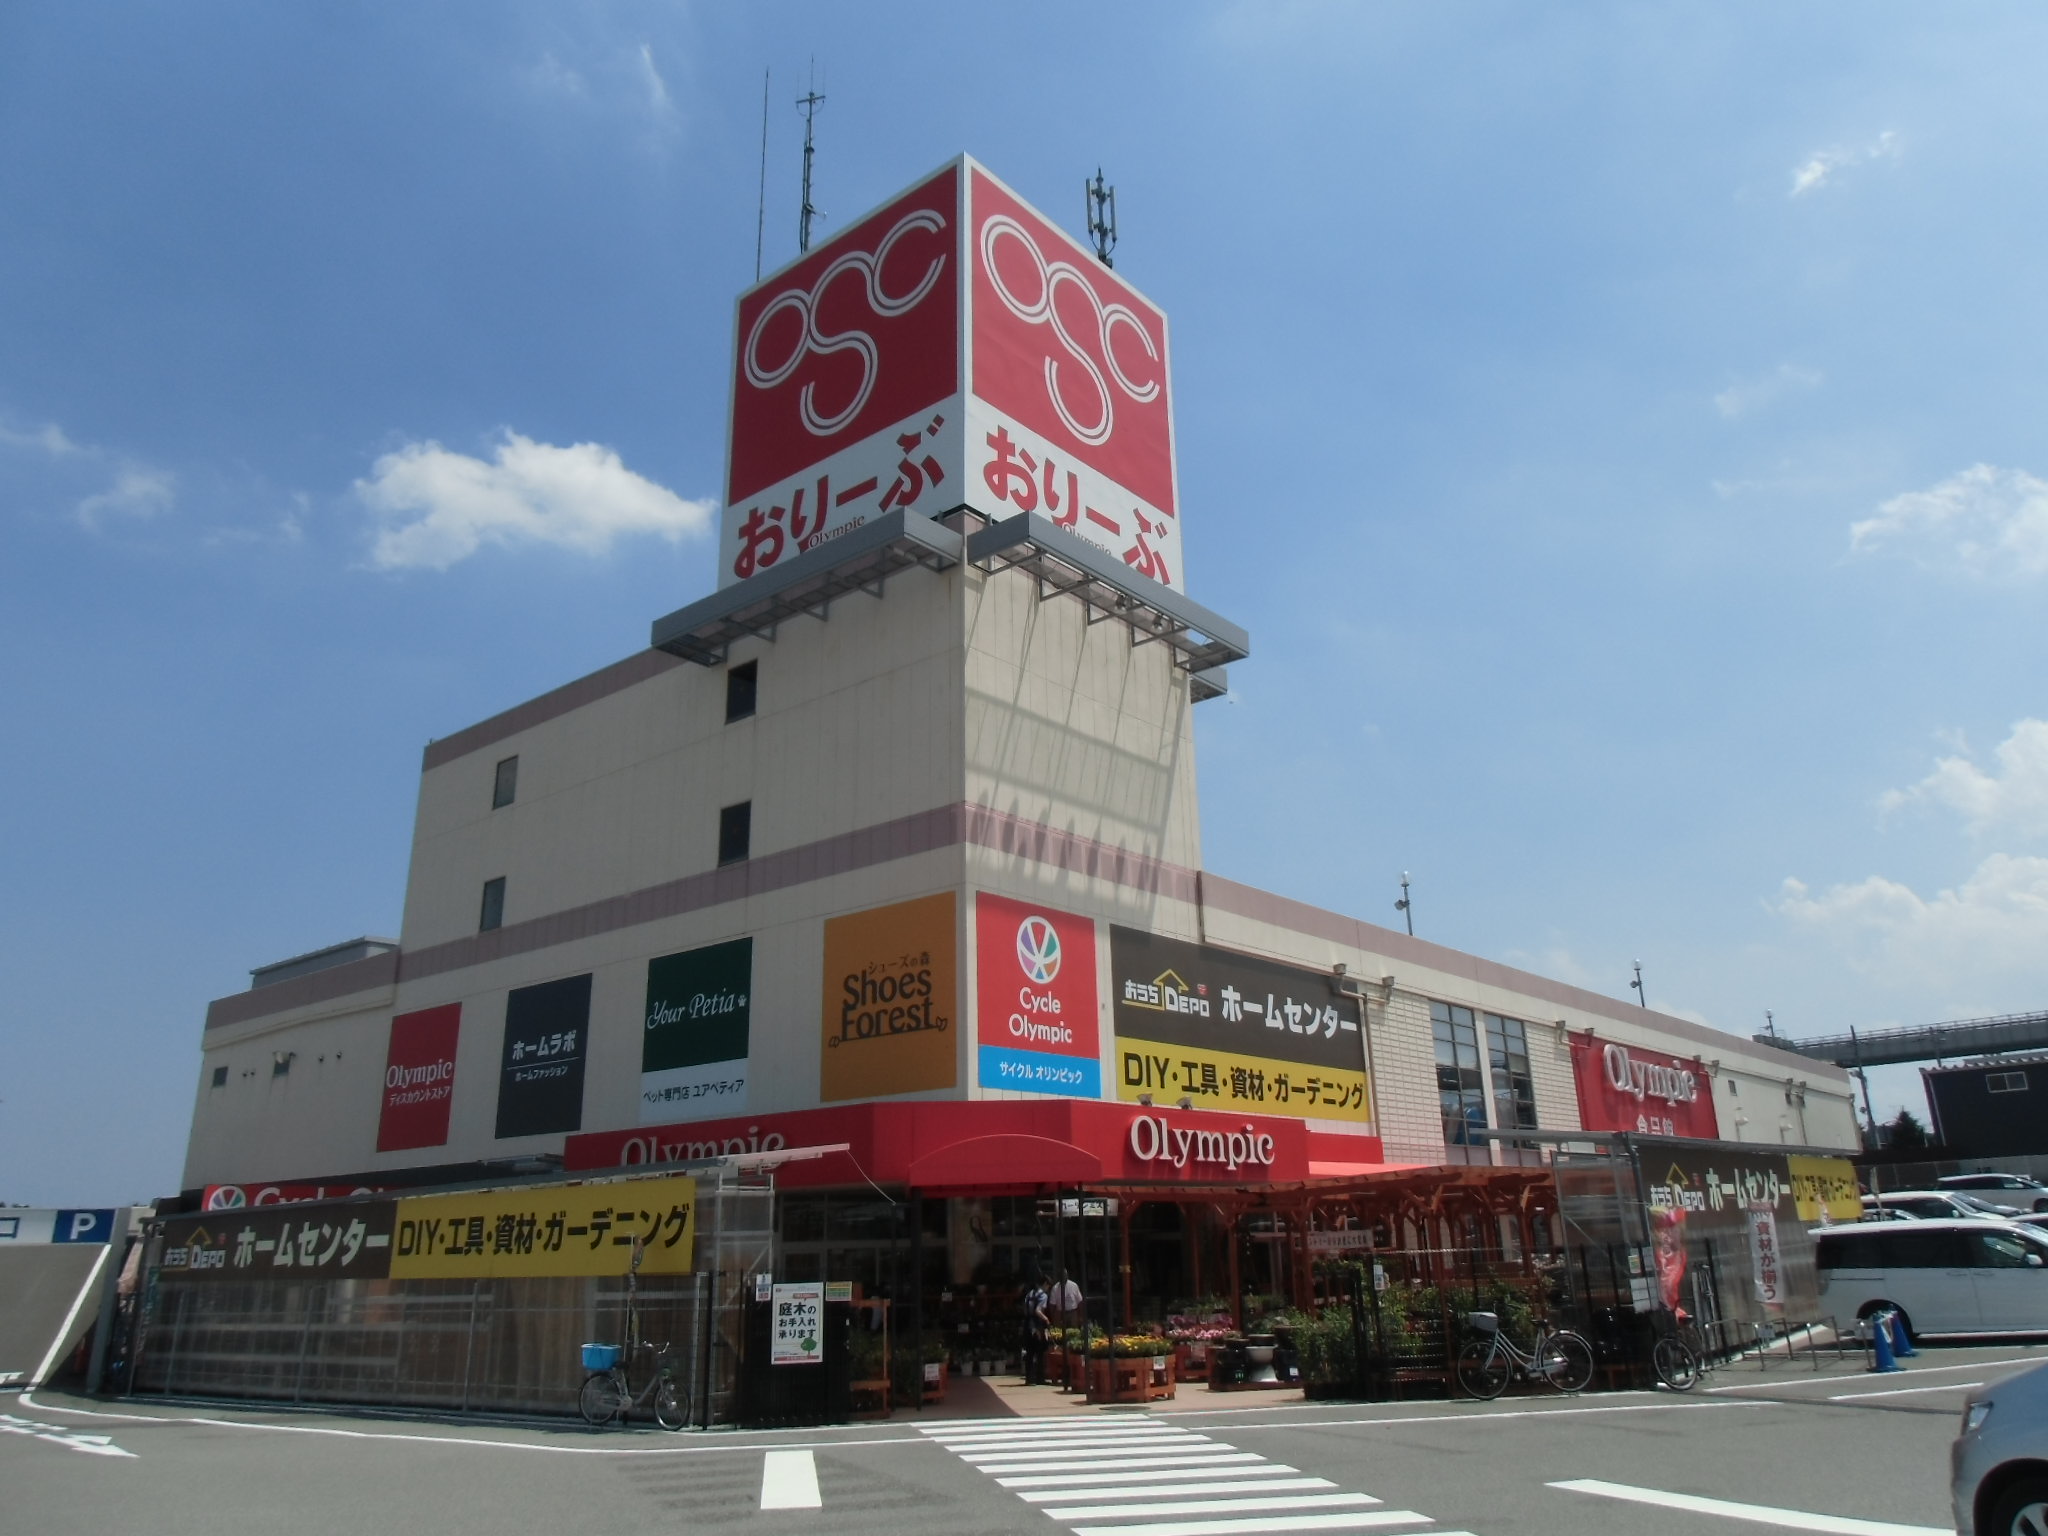 Supermarket. 898m to Olympic Chiba Sakuragi store (Super)